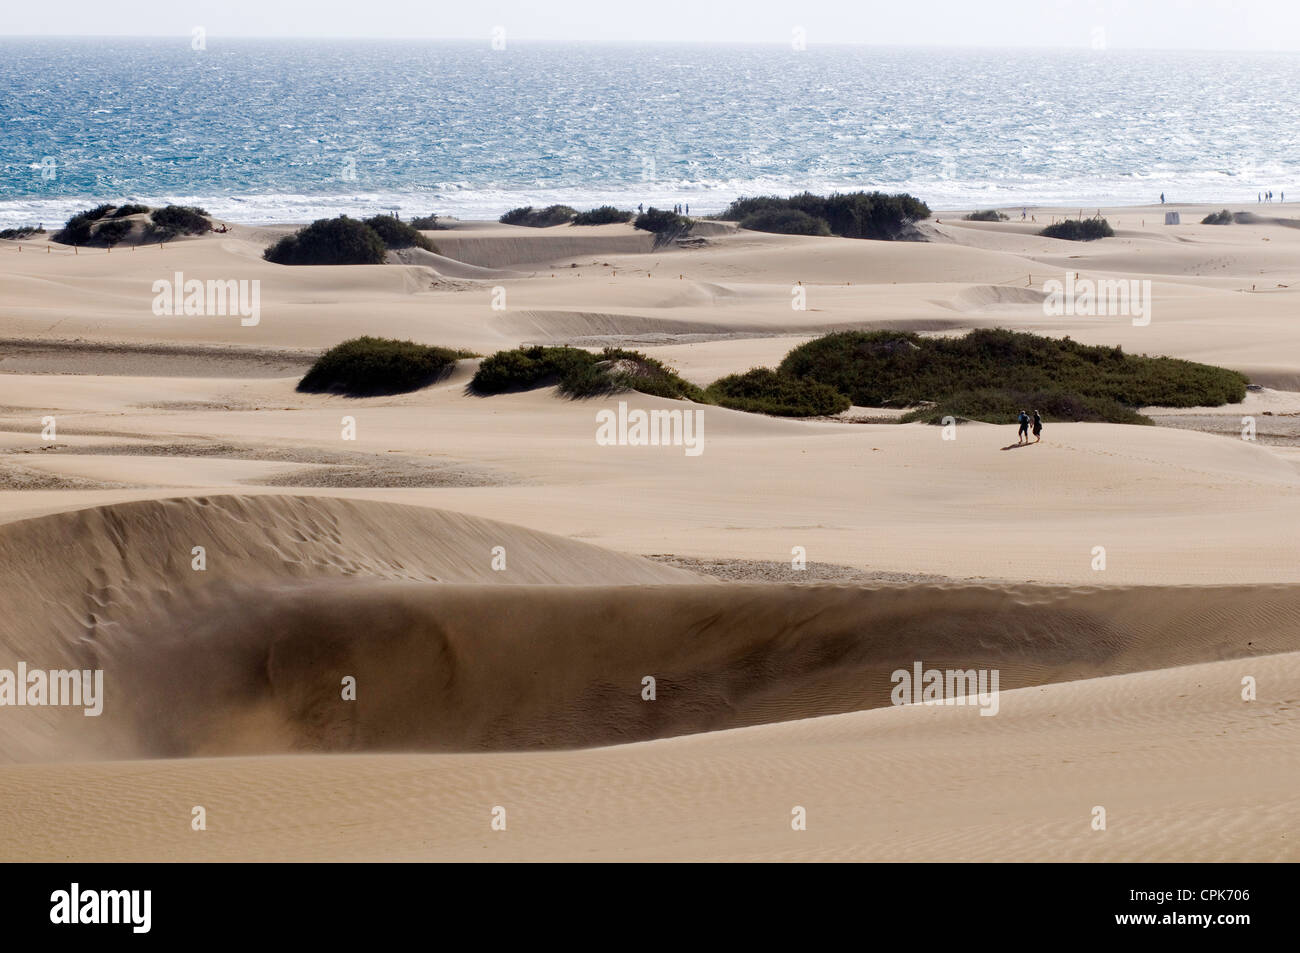 Maspalomas gran canaria sand dune dunes wind blown desert deserts arid places of beach beaches Playa Del Ingles el oasis Stock Photo